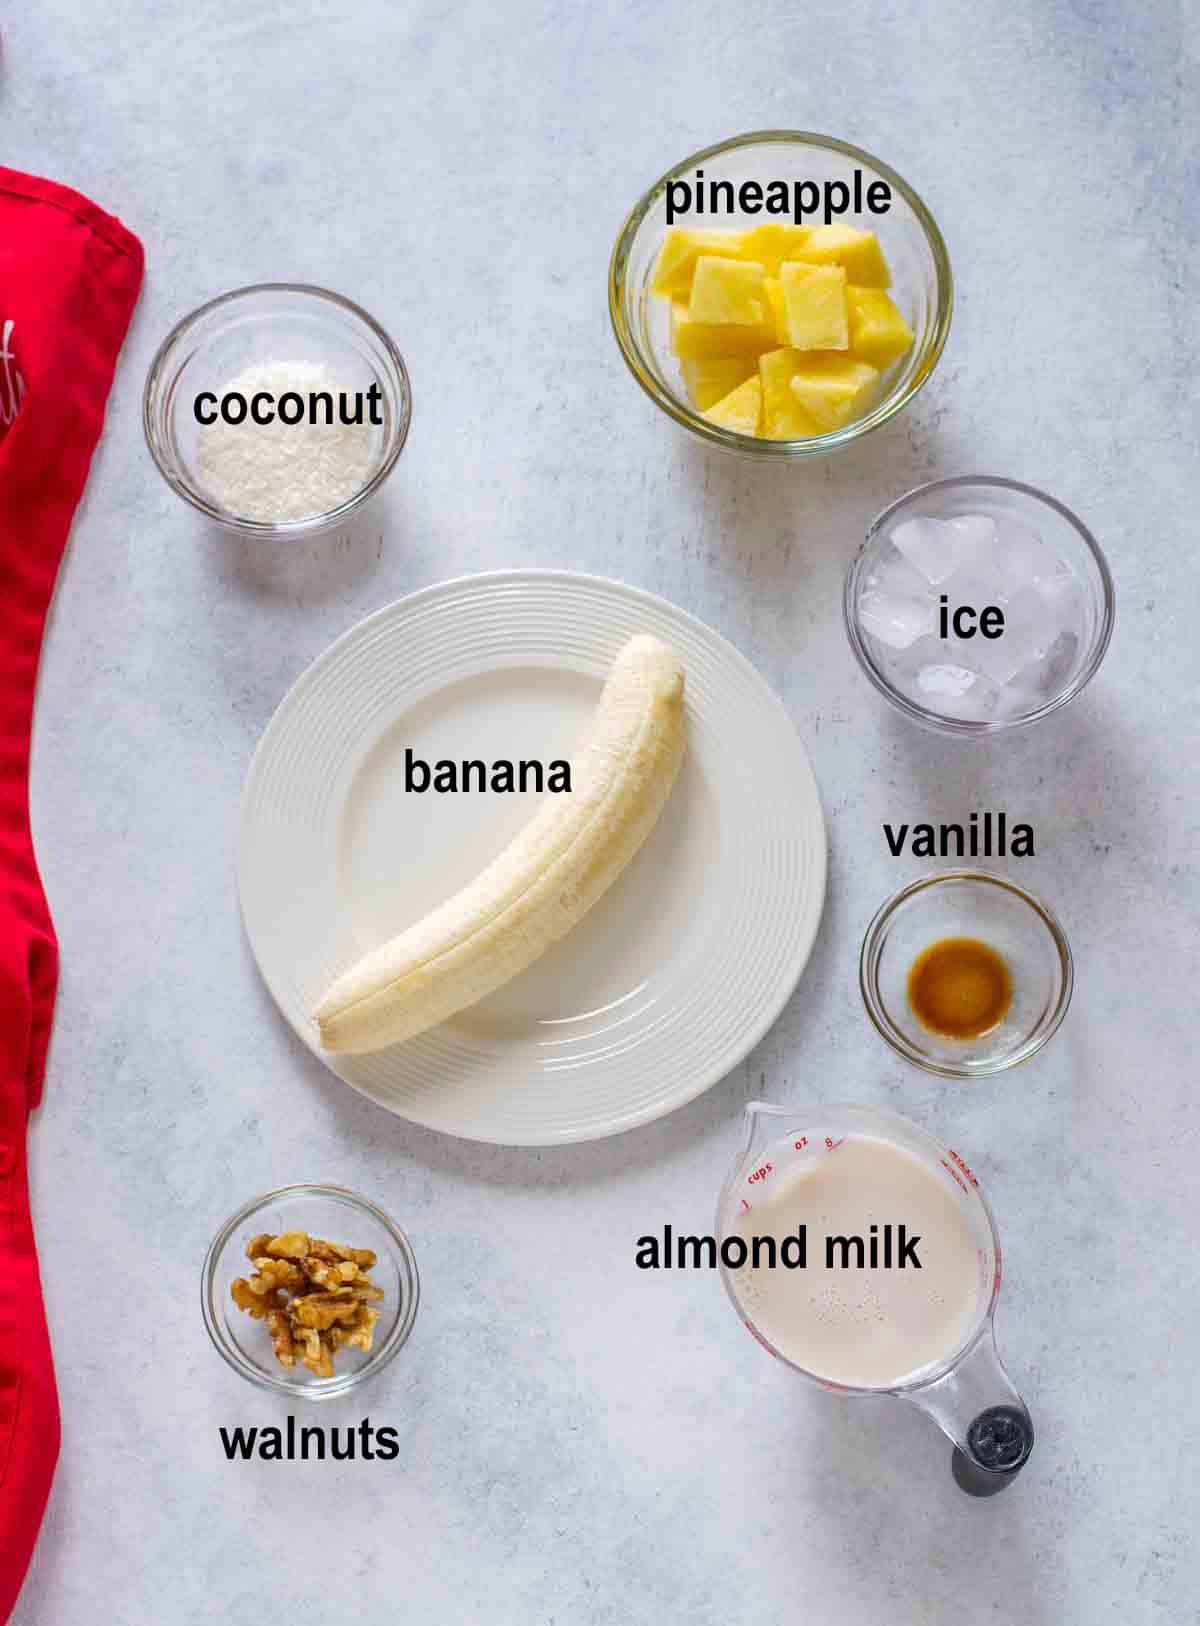 banana, pineapple chunks, almond milk, vanilla, walnuts, coconut, ice